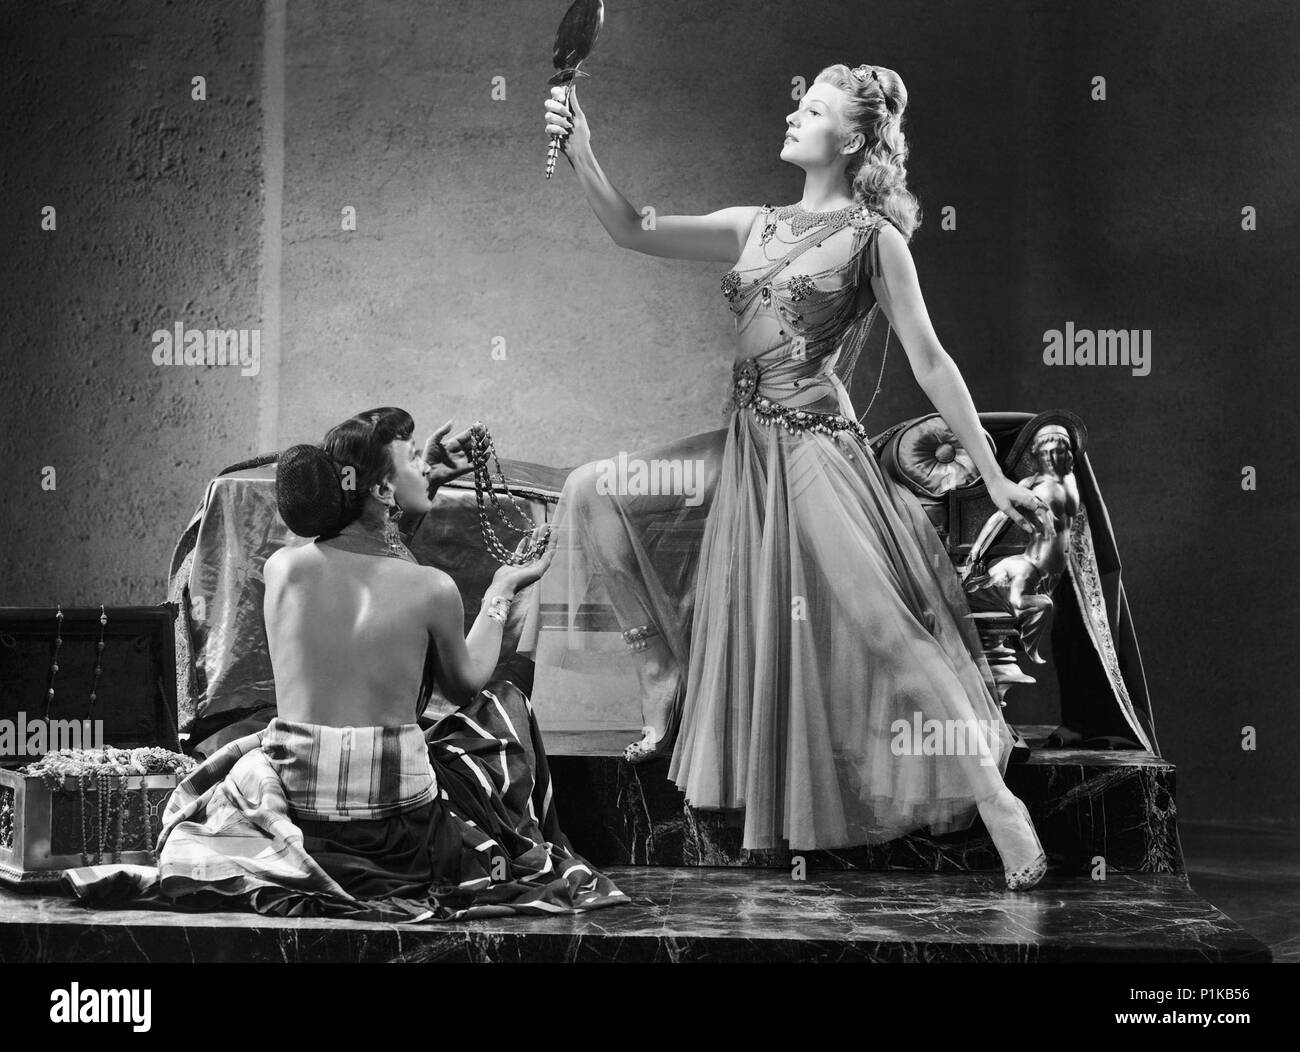 Original Film Title: SALOME. English Title: SALOME: THE DANCE OF THE SEVEN  VEILS. Film Director: WILLIAM DIETERLE. Year: 1953. Stars: RITA HAYWORTH.  Credit: COLUMBIA PICTURES / Album Stock Photo - Alamy